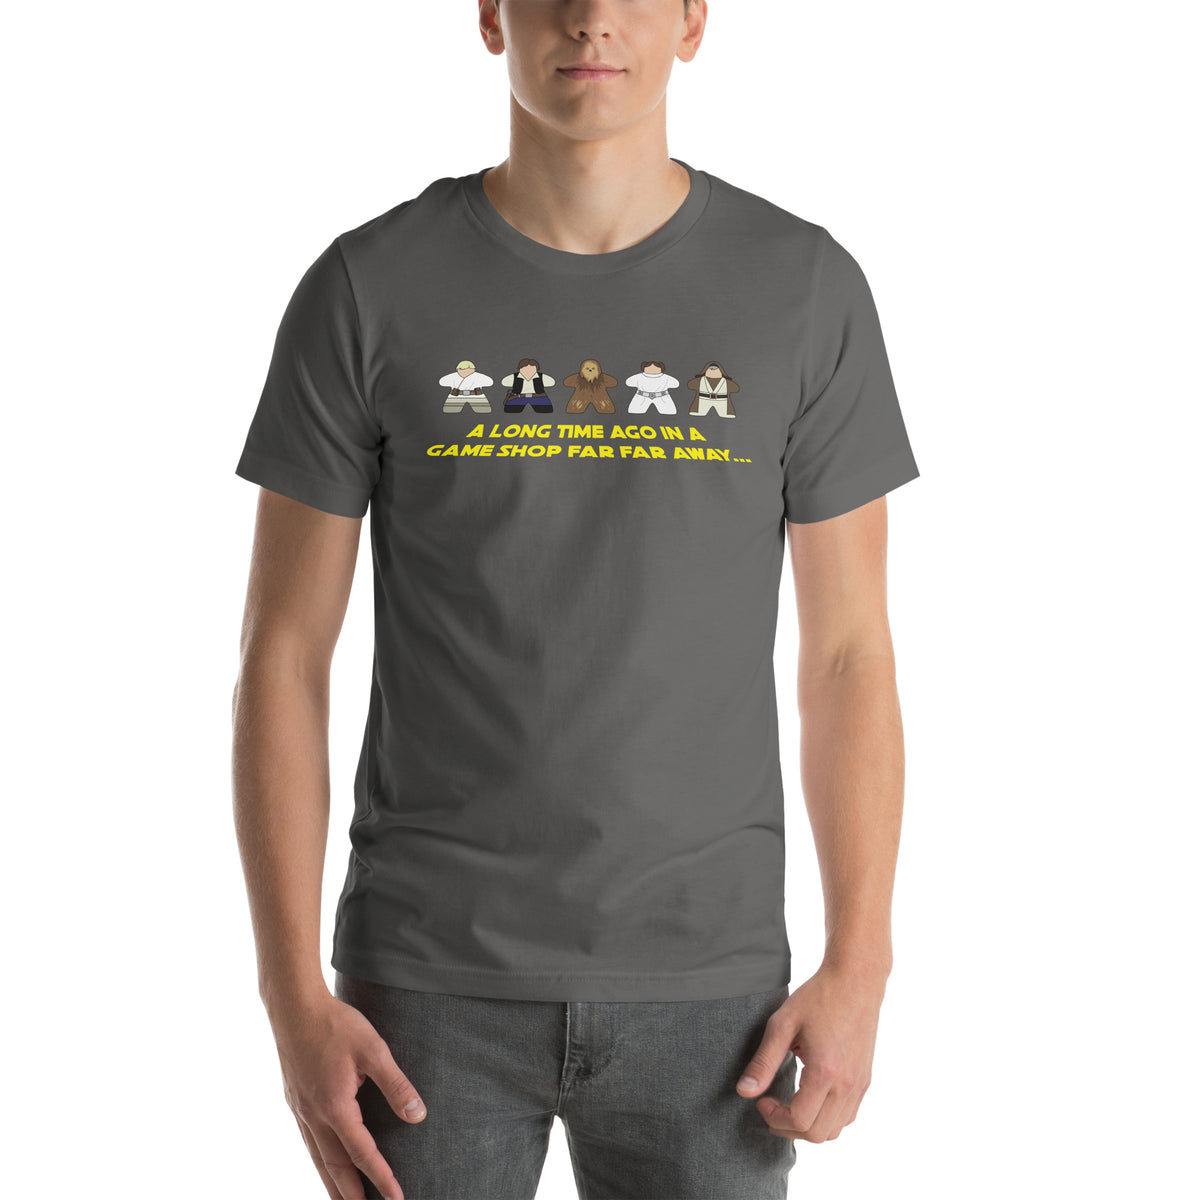 Asphalt Grey T-Shirt with Star Wars Meeples Parody Design on model